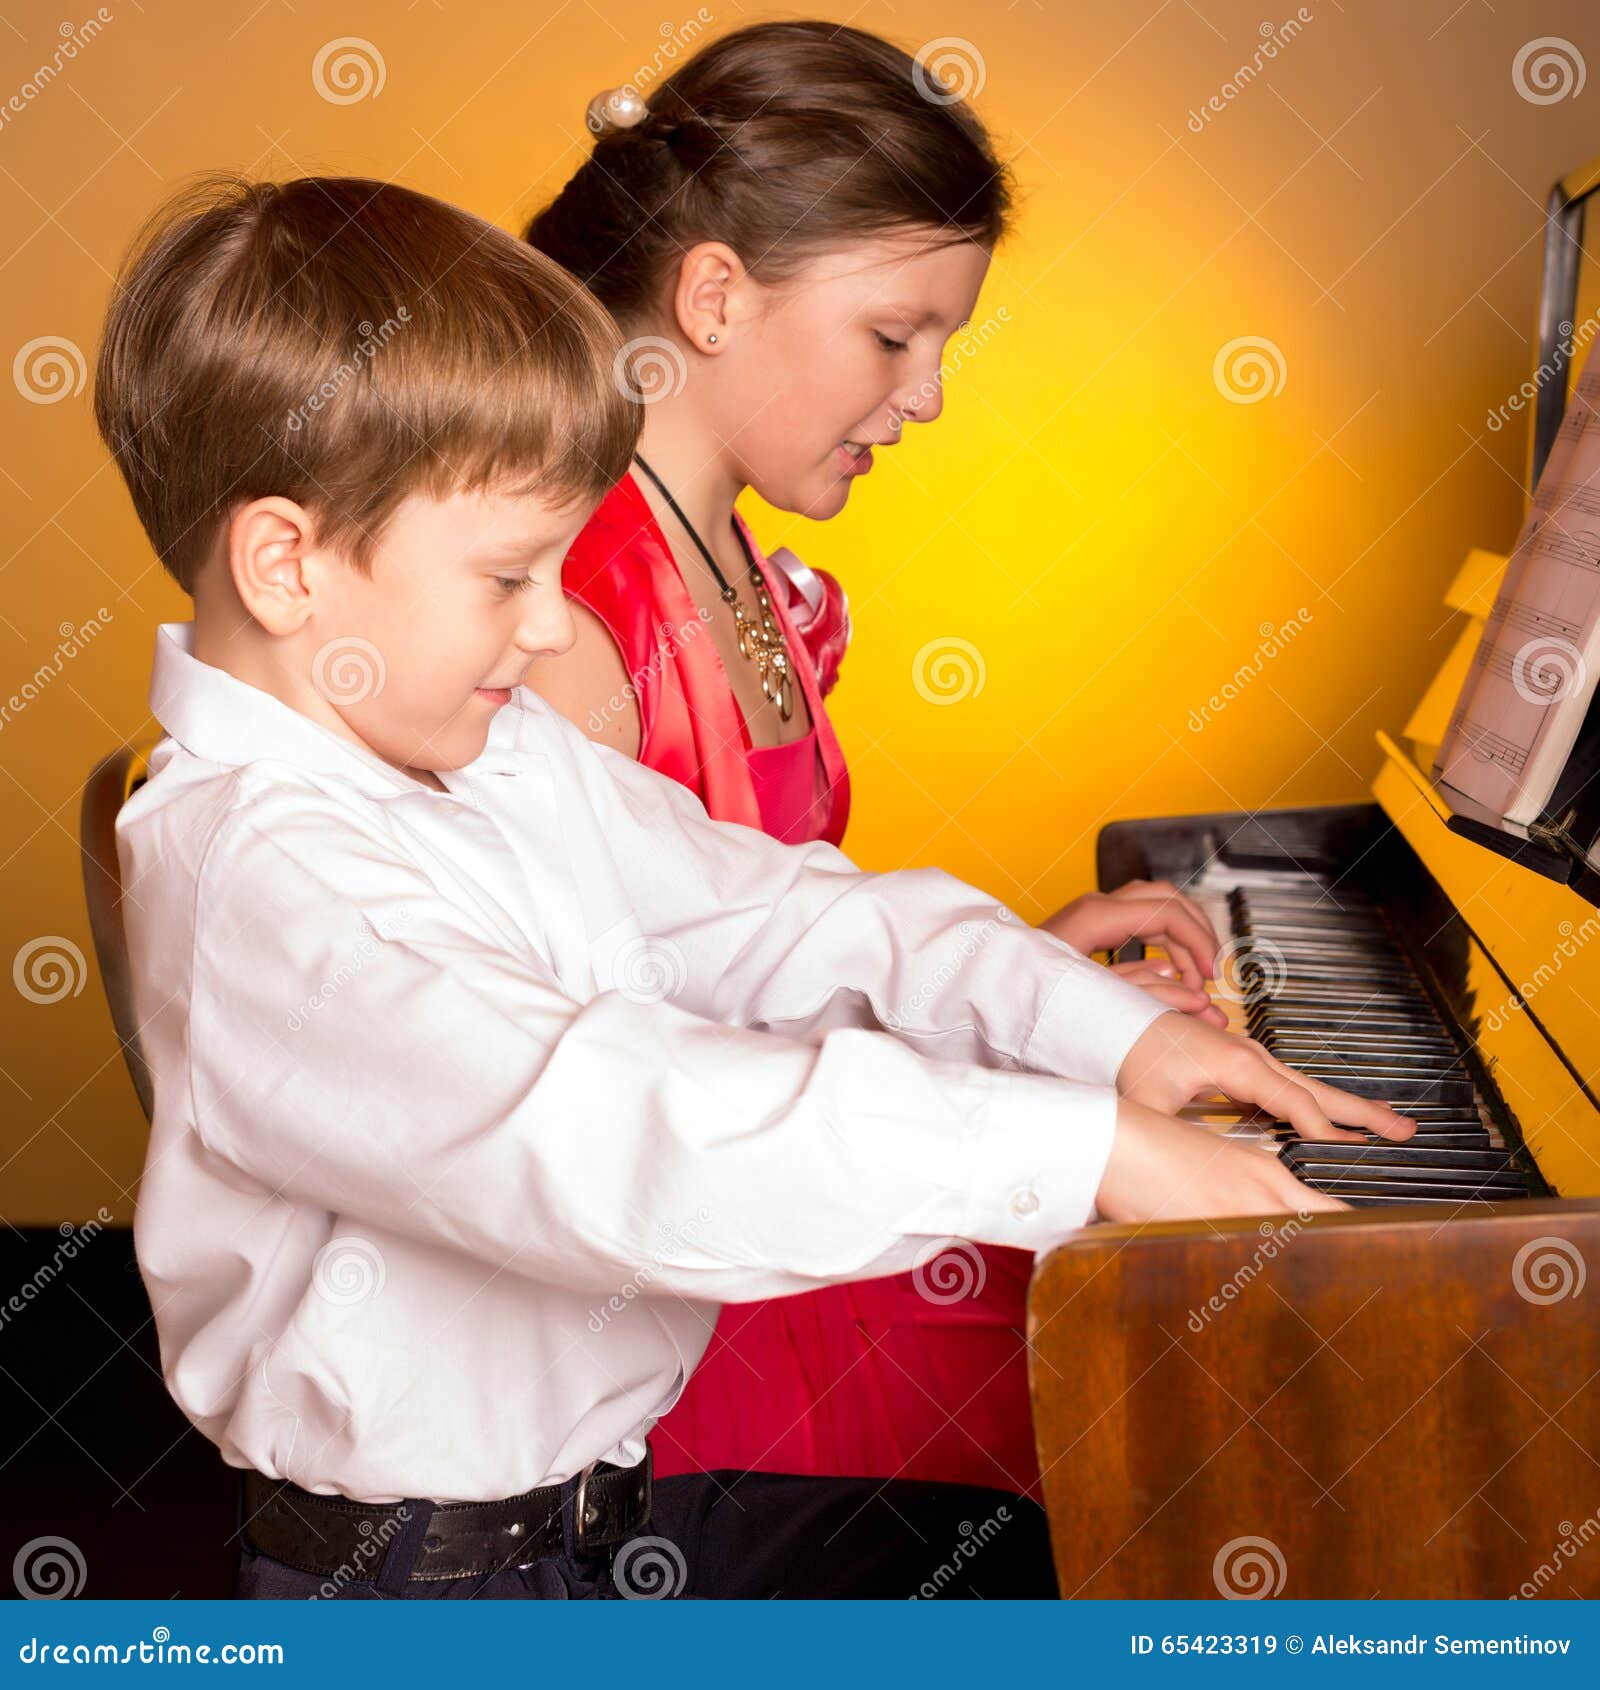 Sister play piano. Мальчик и девочка играют на пианино. Сестра играет на пианино. Девочка играет на пианино с братом. Старший брат пианино.